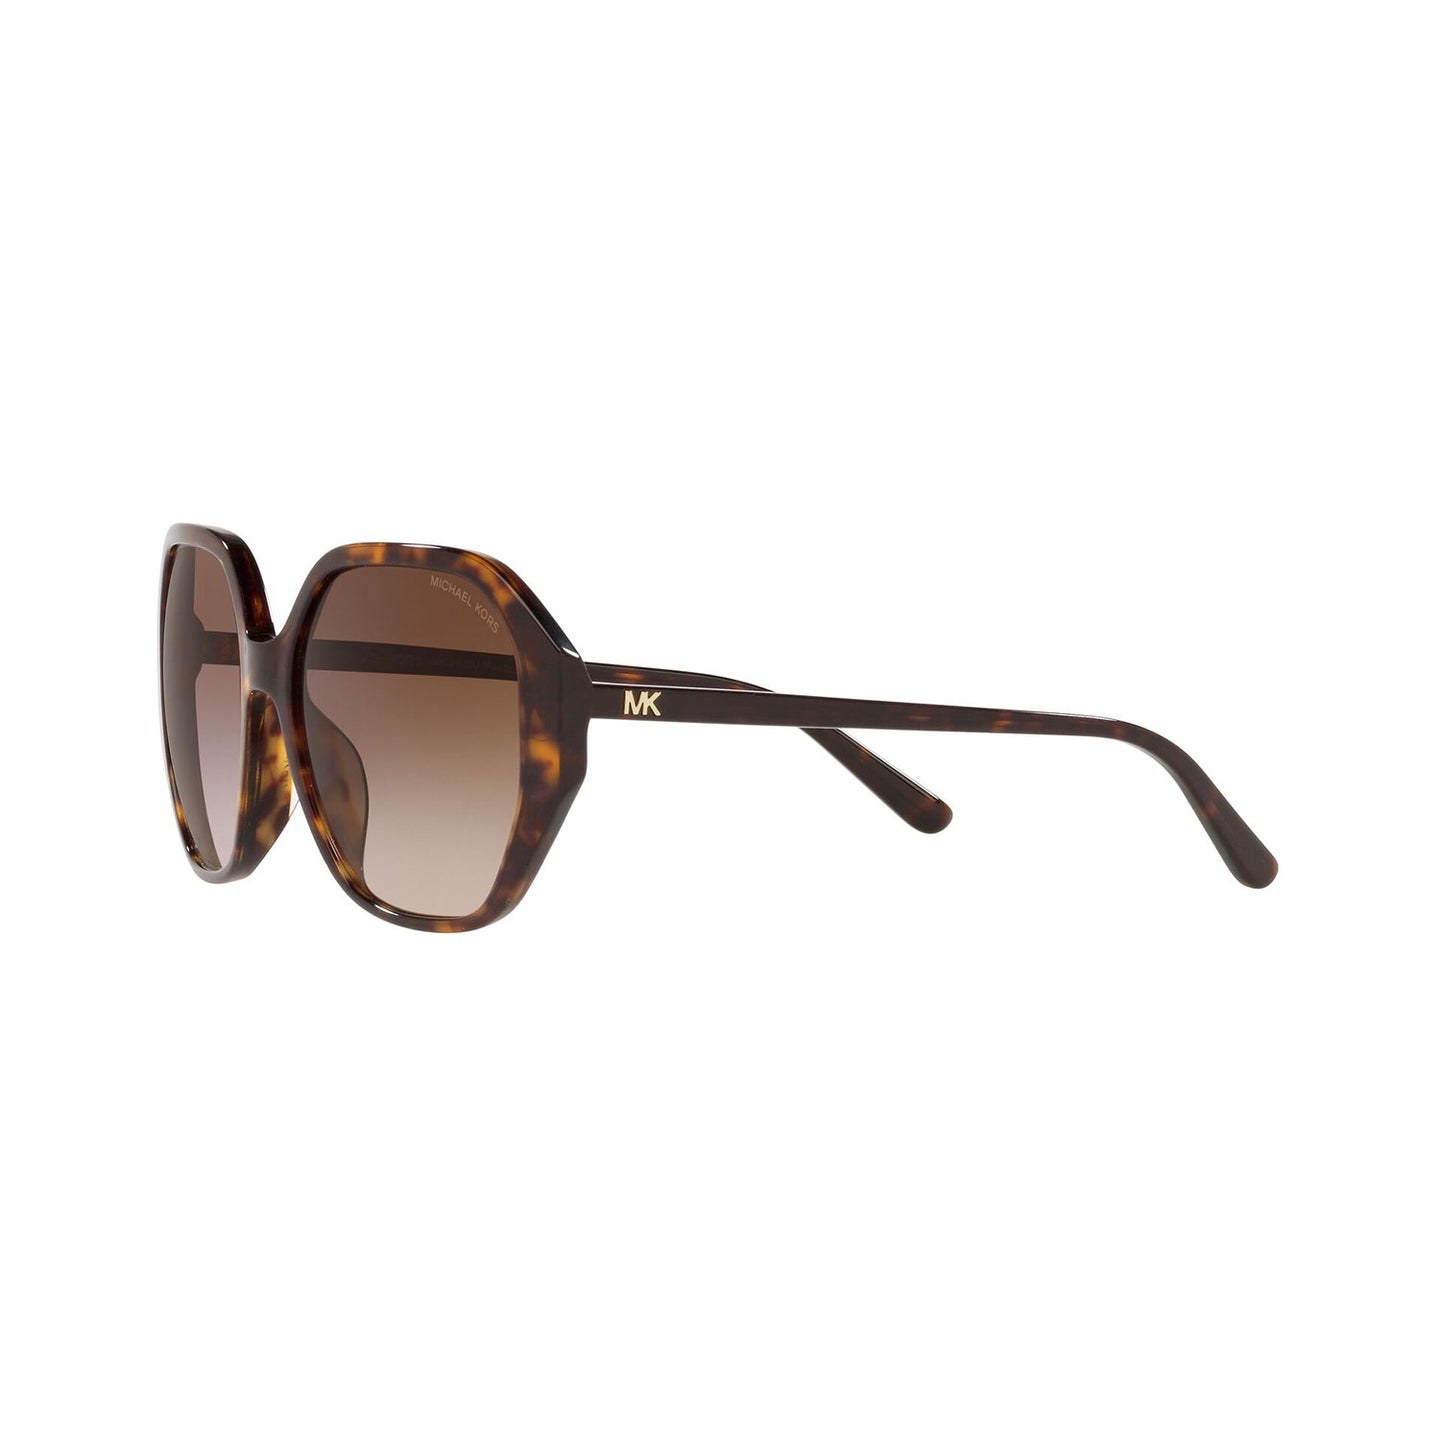 sunglasses michael kors model mk 2138u color 300613 dark tortoise